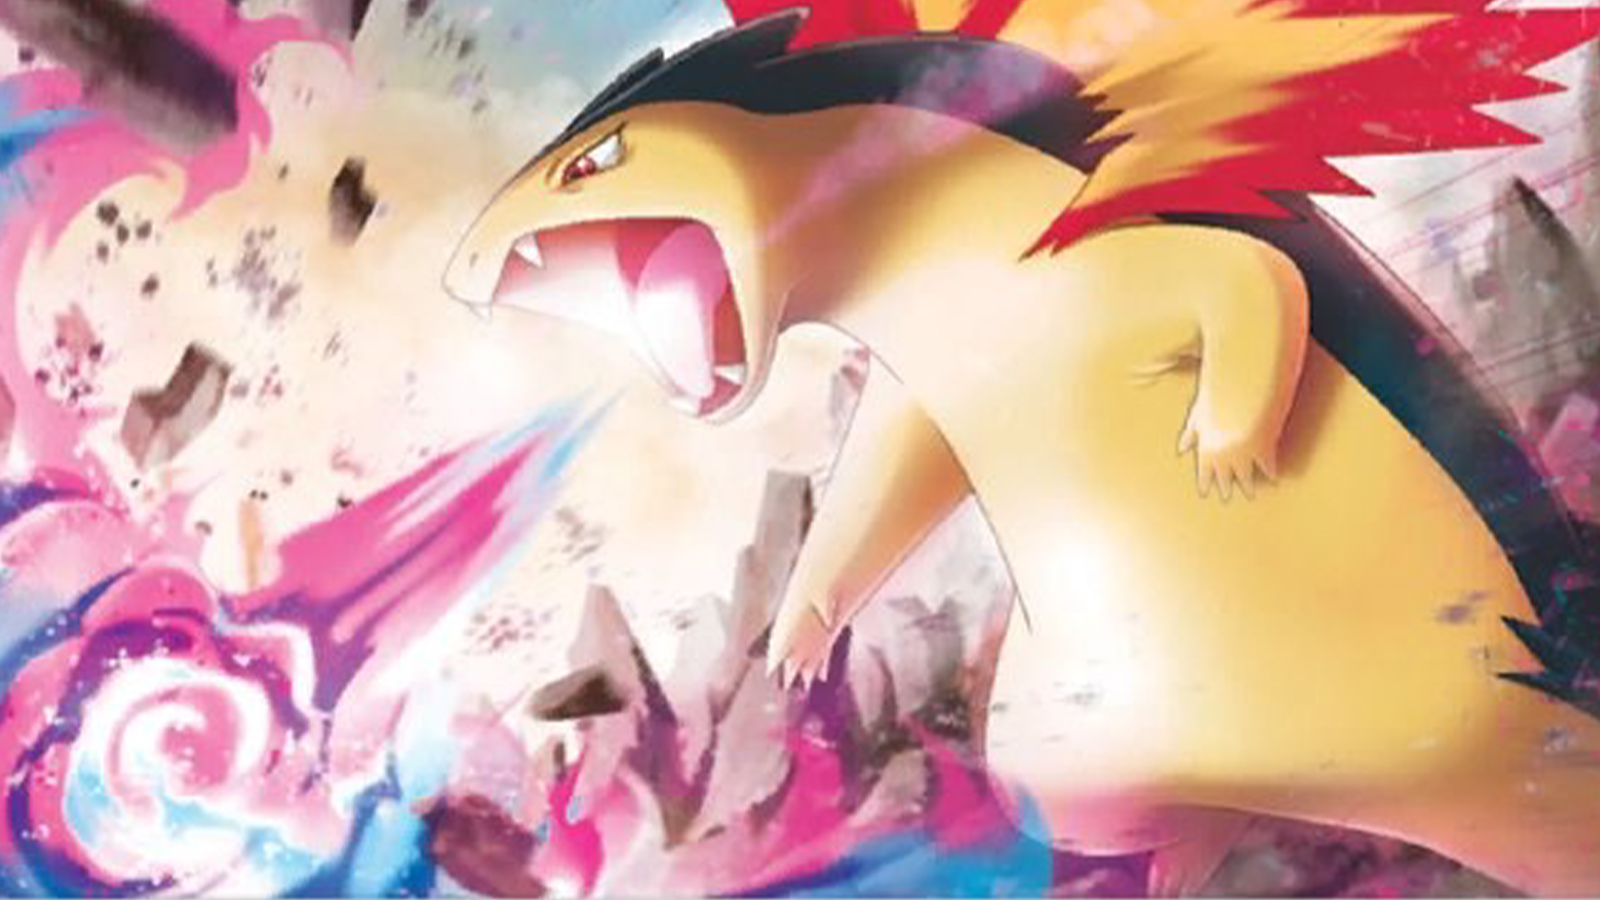 How To Defeat Samurott in Pokémon Scarlet & Violet - Esports Illustrated